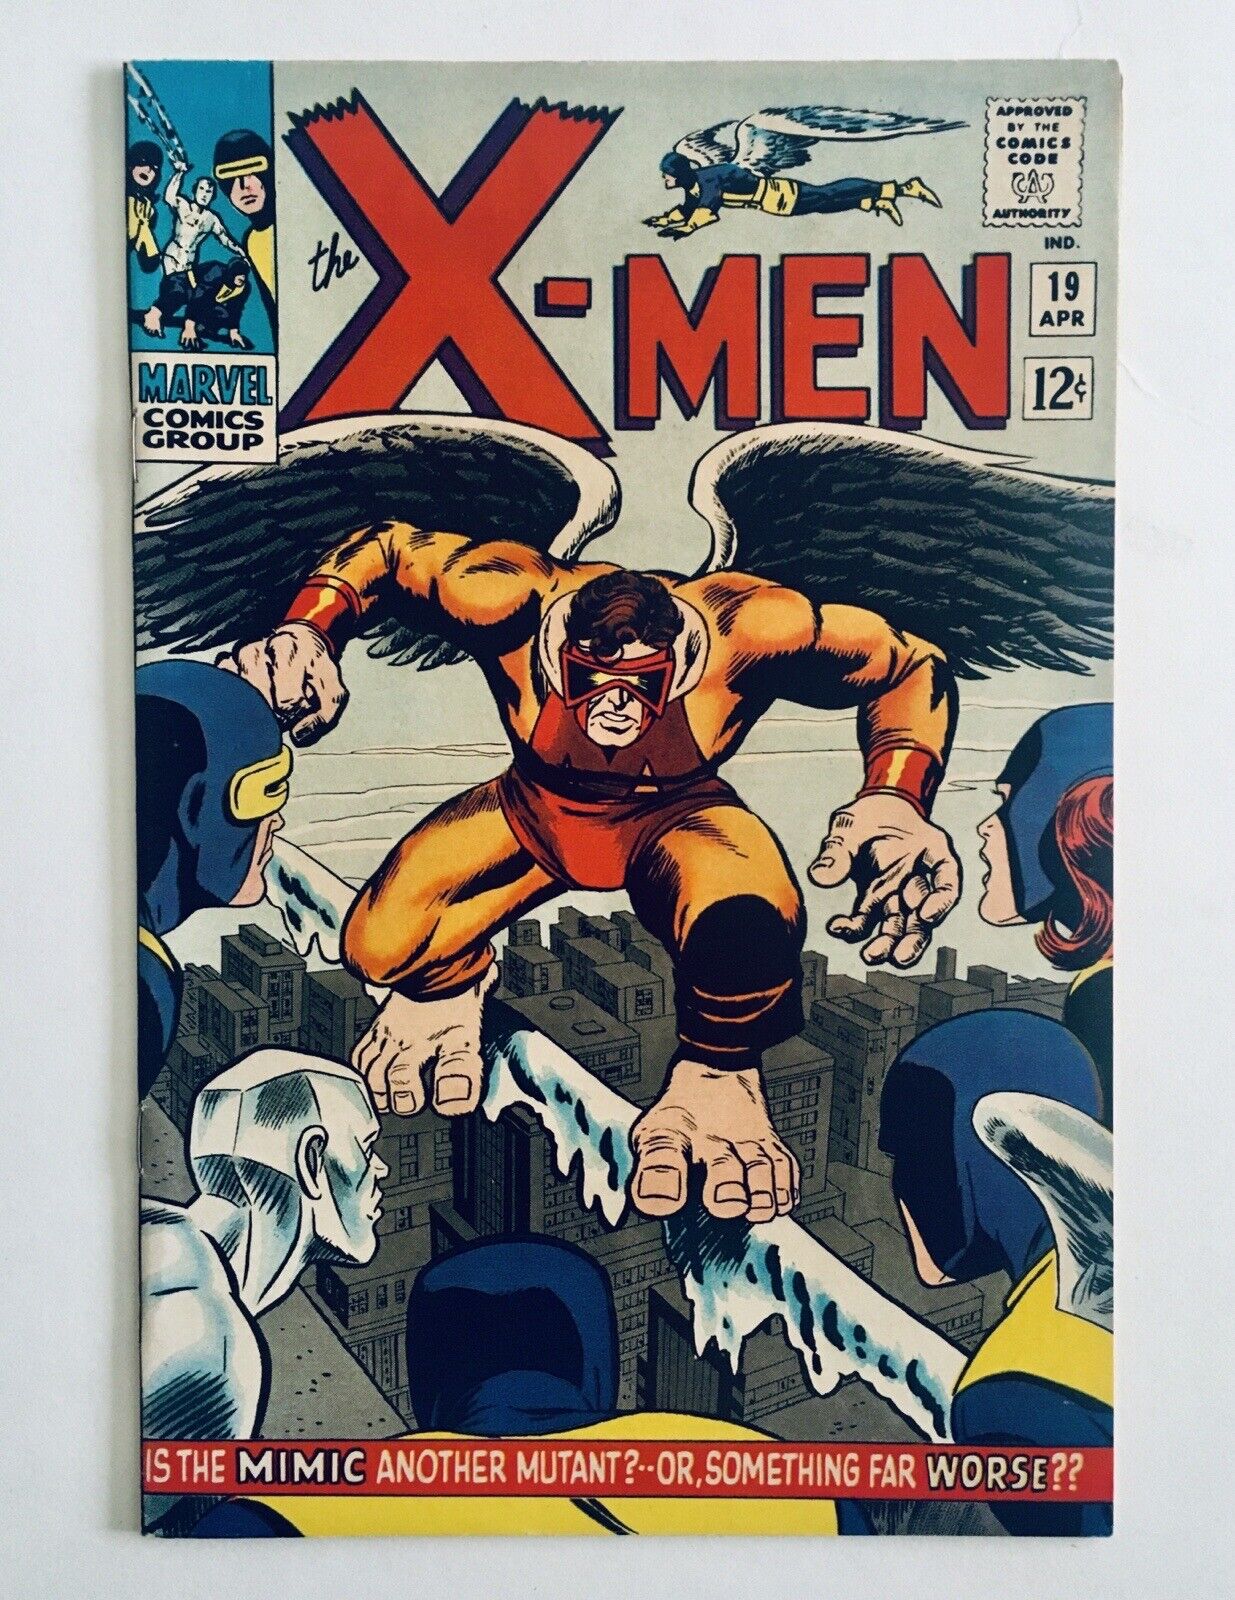 X-MEN #19, (Apr 1966), Silver Age, 1st App. & ORIGIN the MIMIC, VF, 8.0-8.5, C1